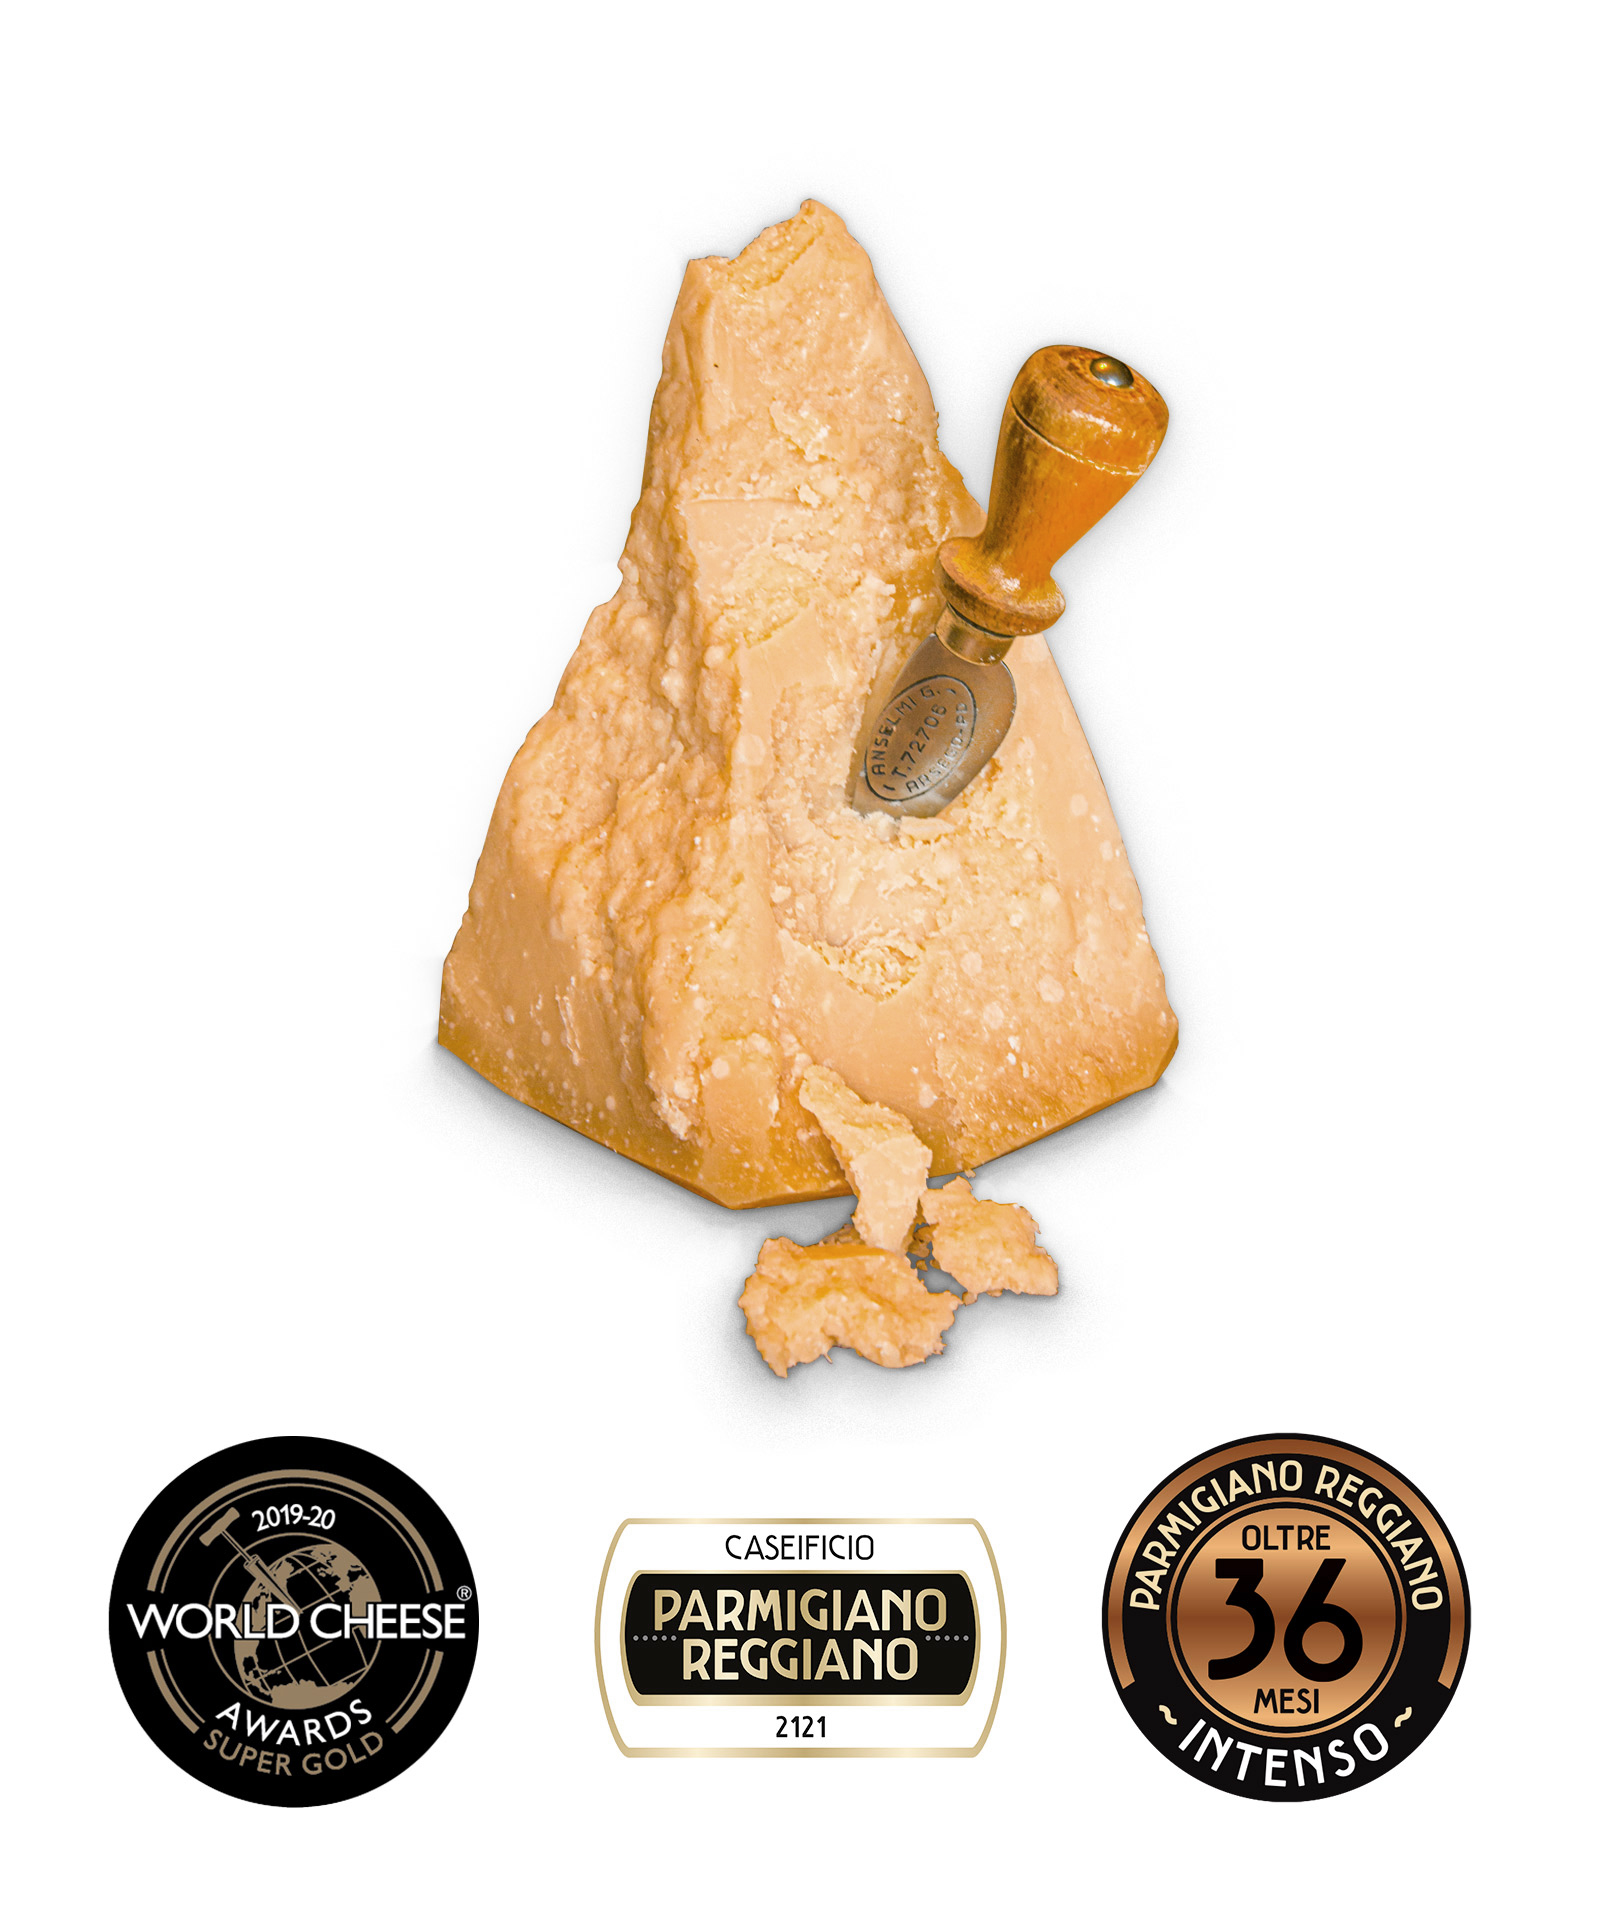 36 Monate Parmigiano Reggiano  DOP Superiore "2121" Parmesan Stravecchio 500/1000g